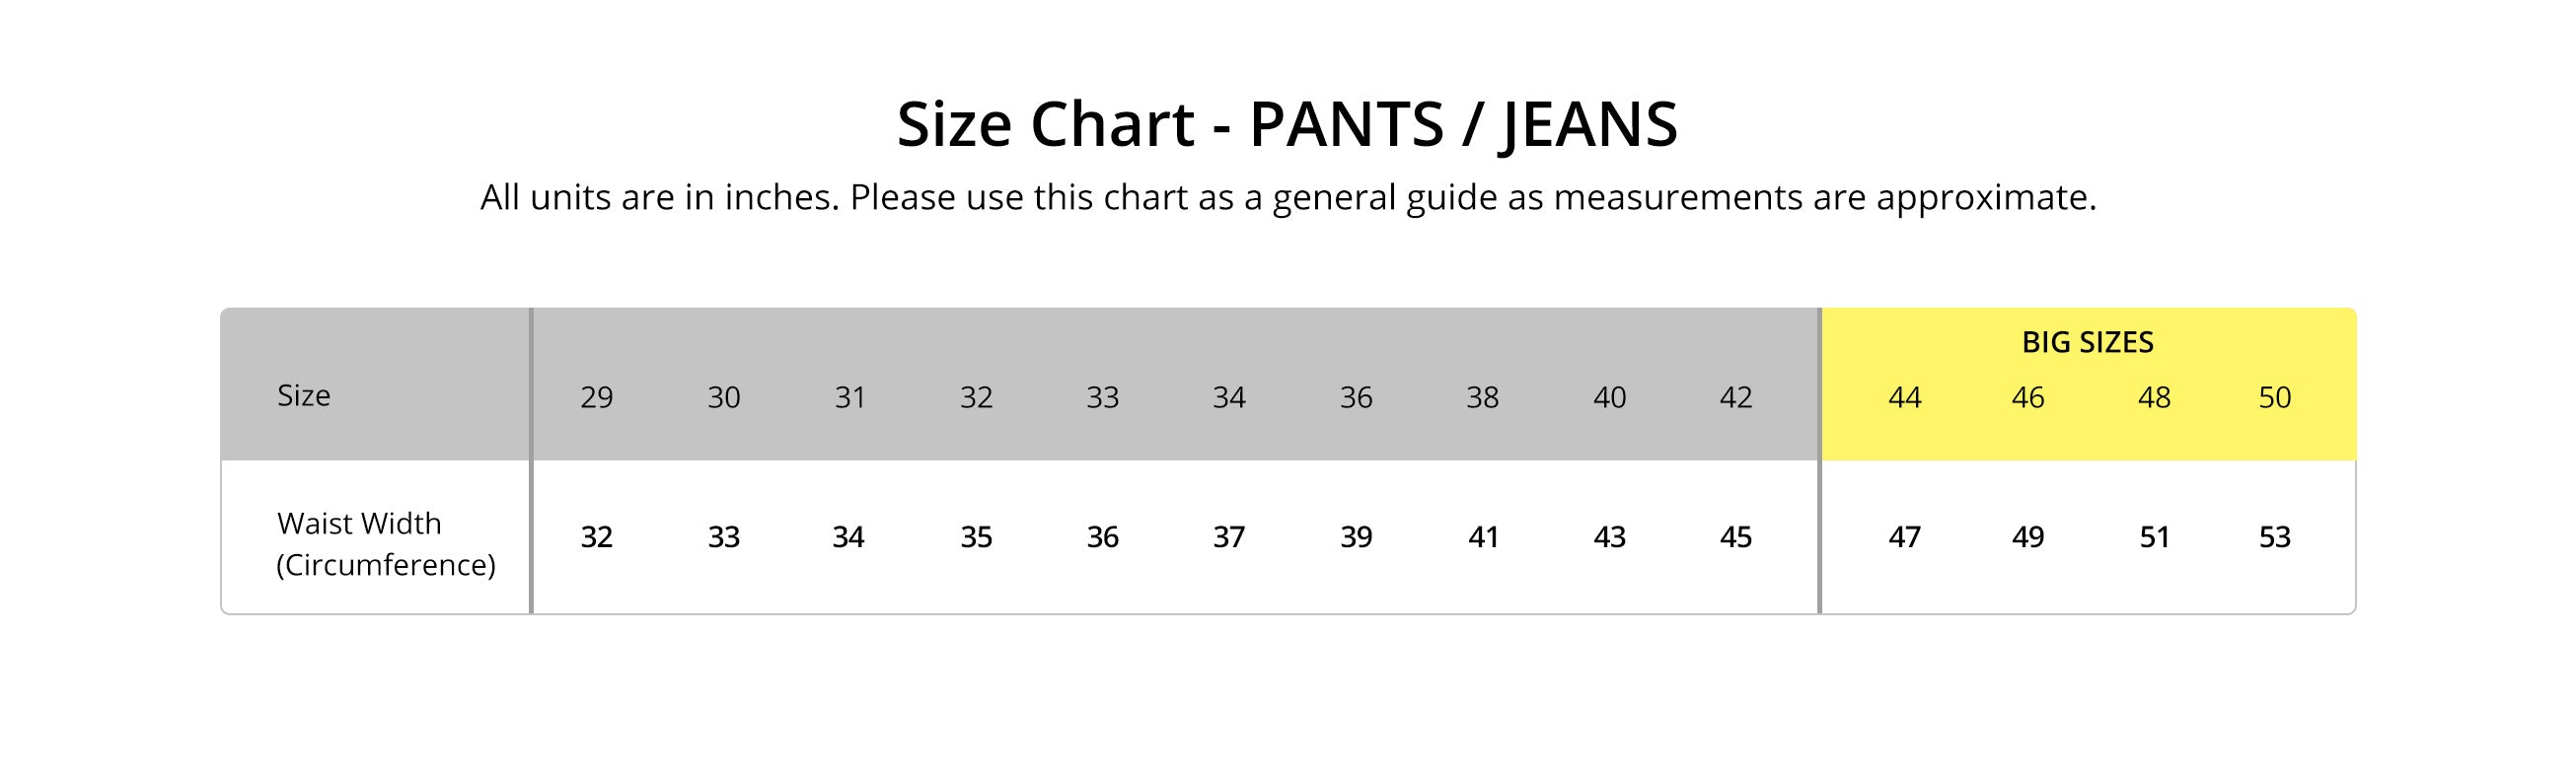 Standard James Size Chart